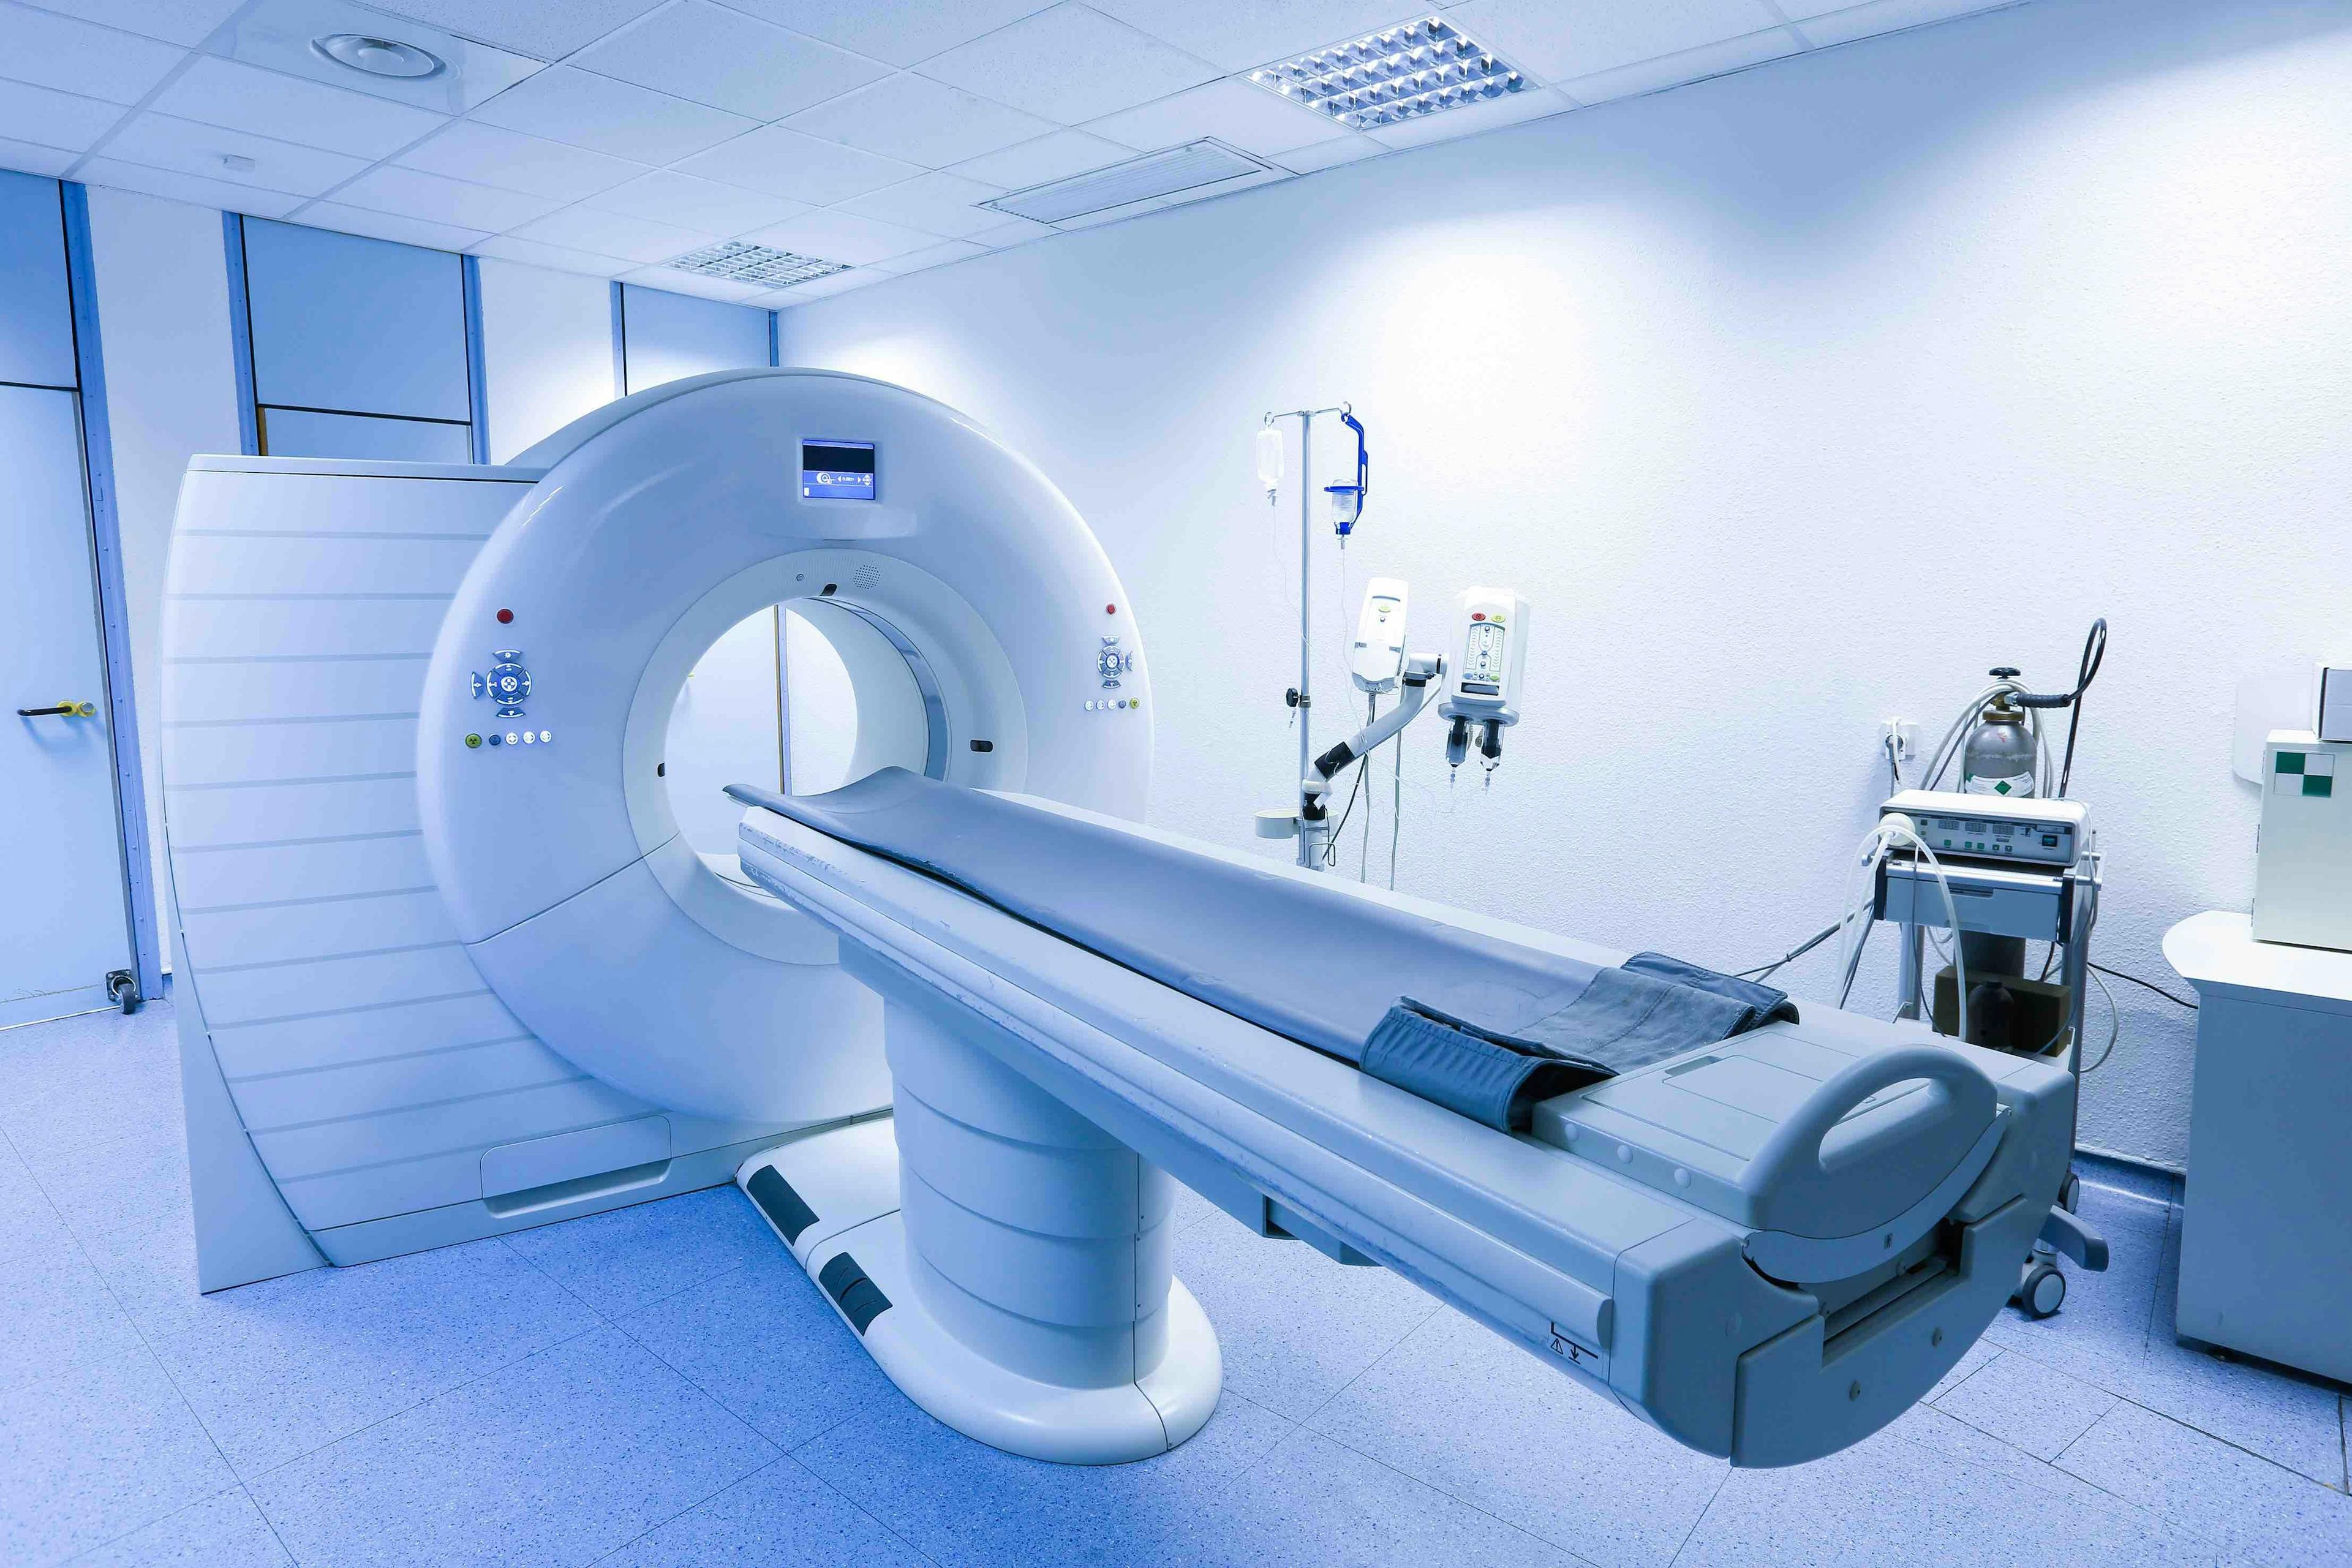 CT scan machine | Image credit: zlikovec - stock.adobe.com